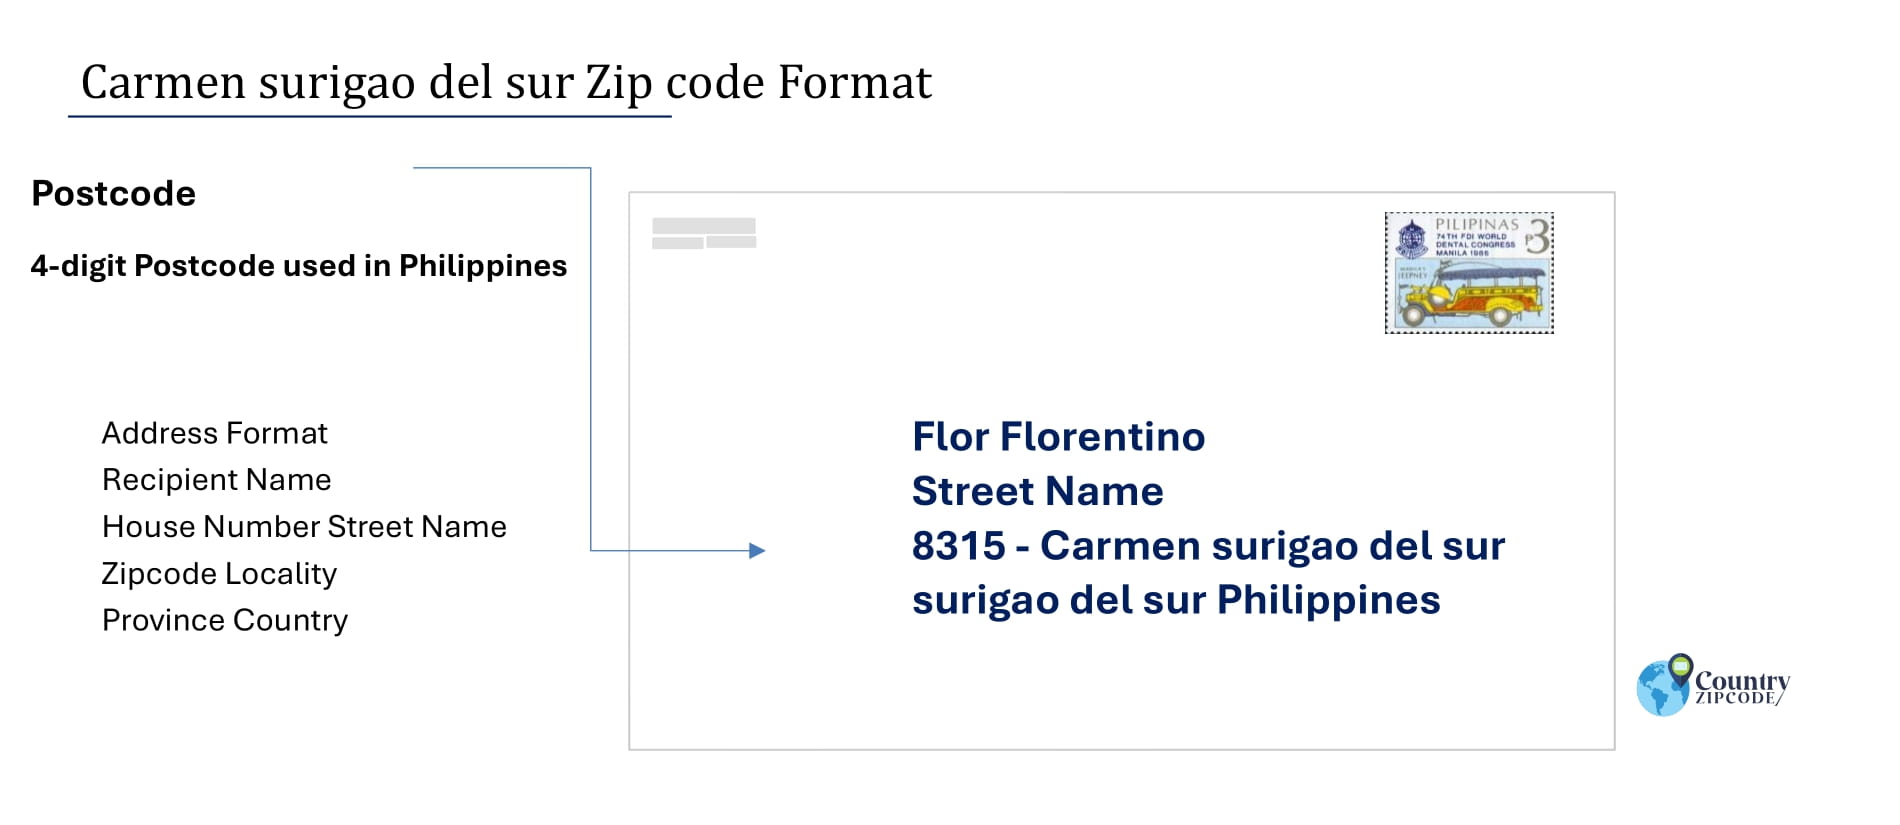 example of Carmen surigao del sur Philippines zip code and address format